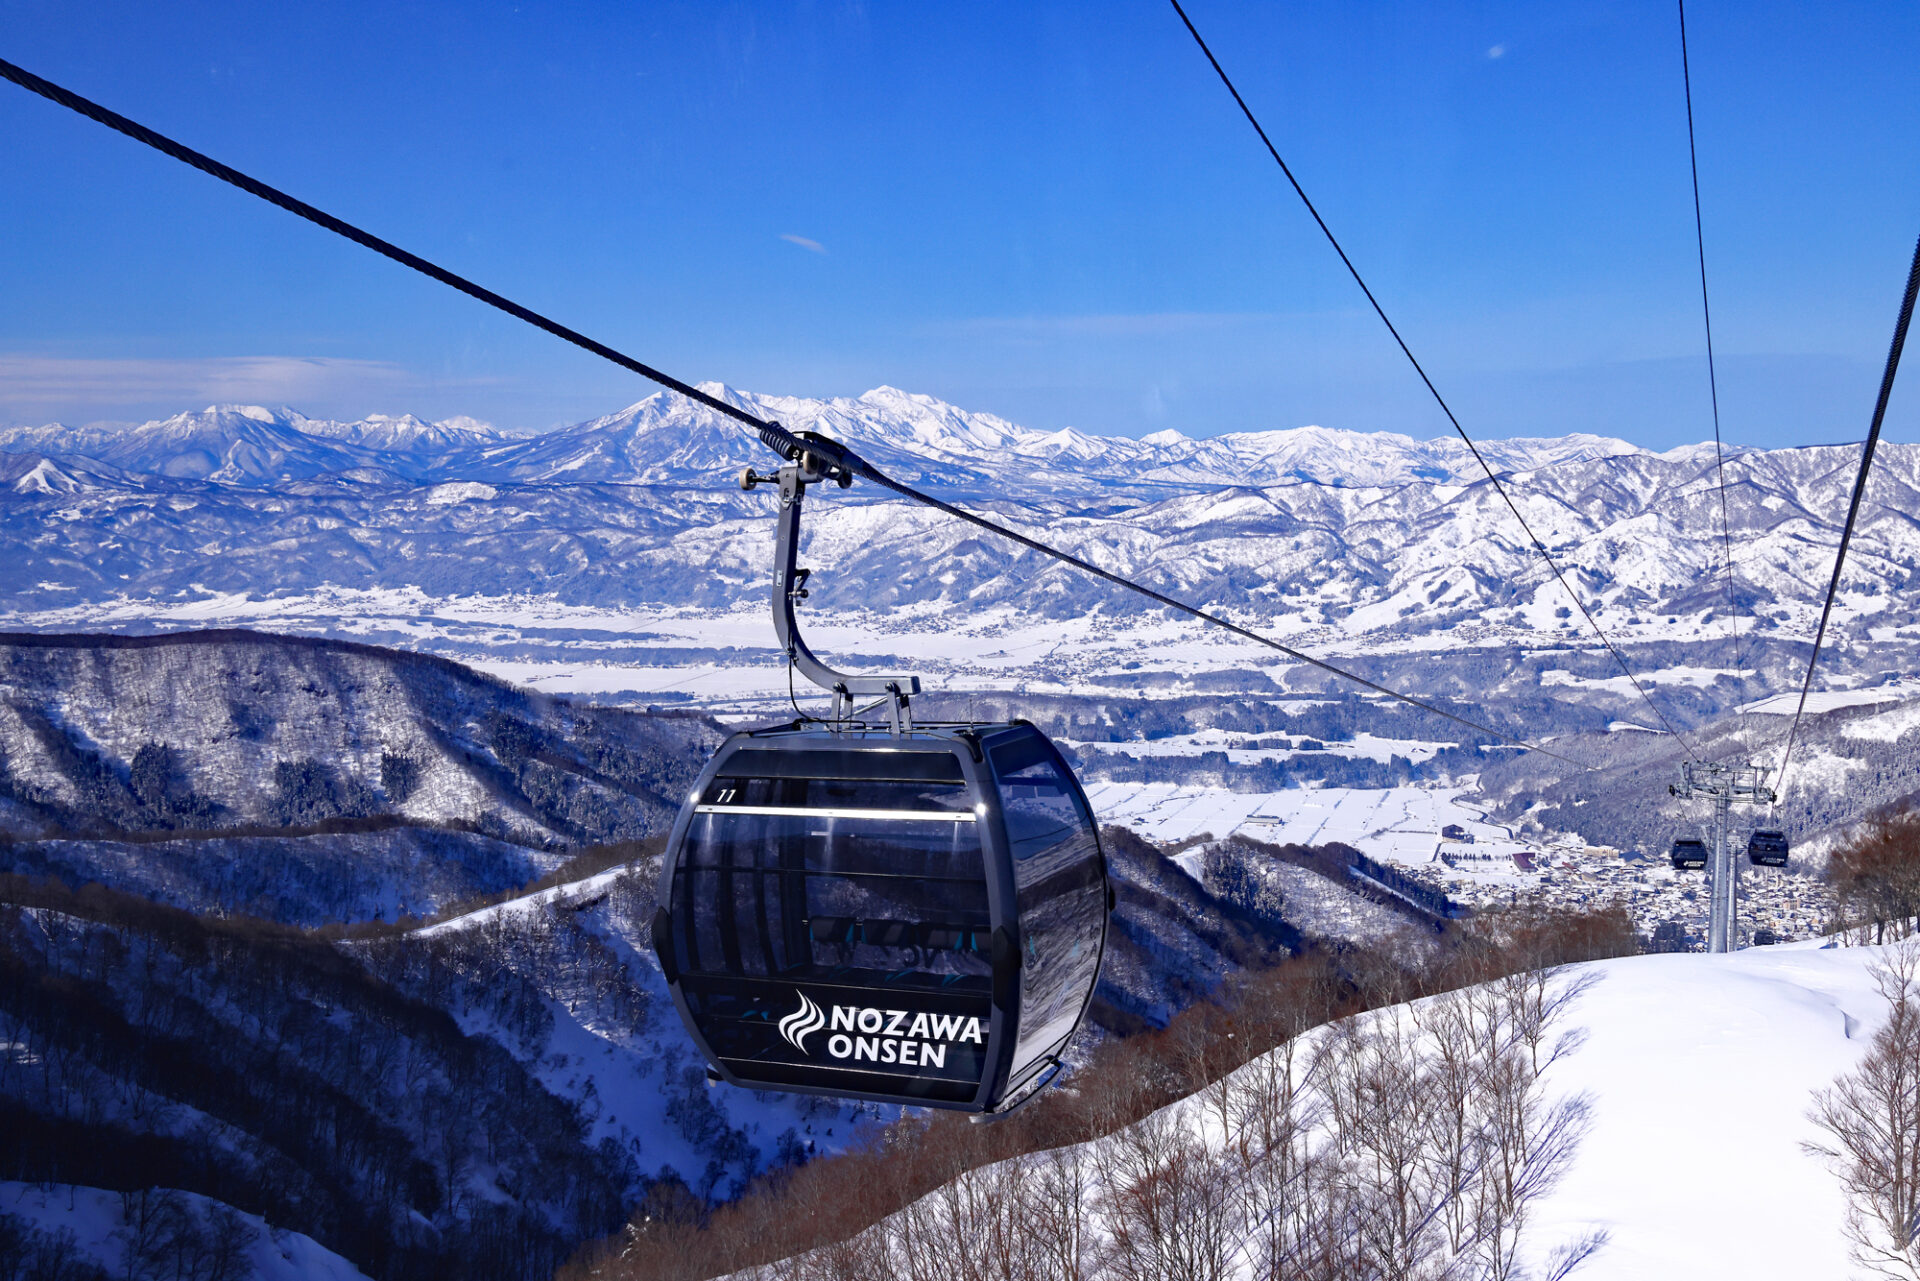 Ski lifts at the ski resort in Nozawa Onsen Snow Resort. (Photo: Nozawa Onsen Snow Resort)